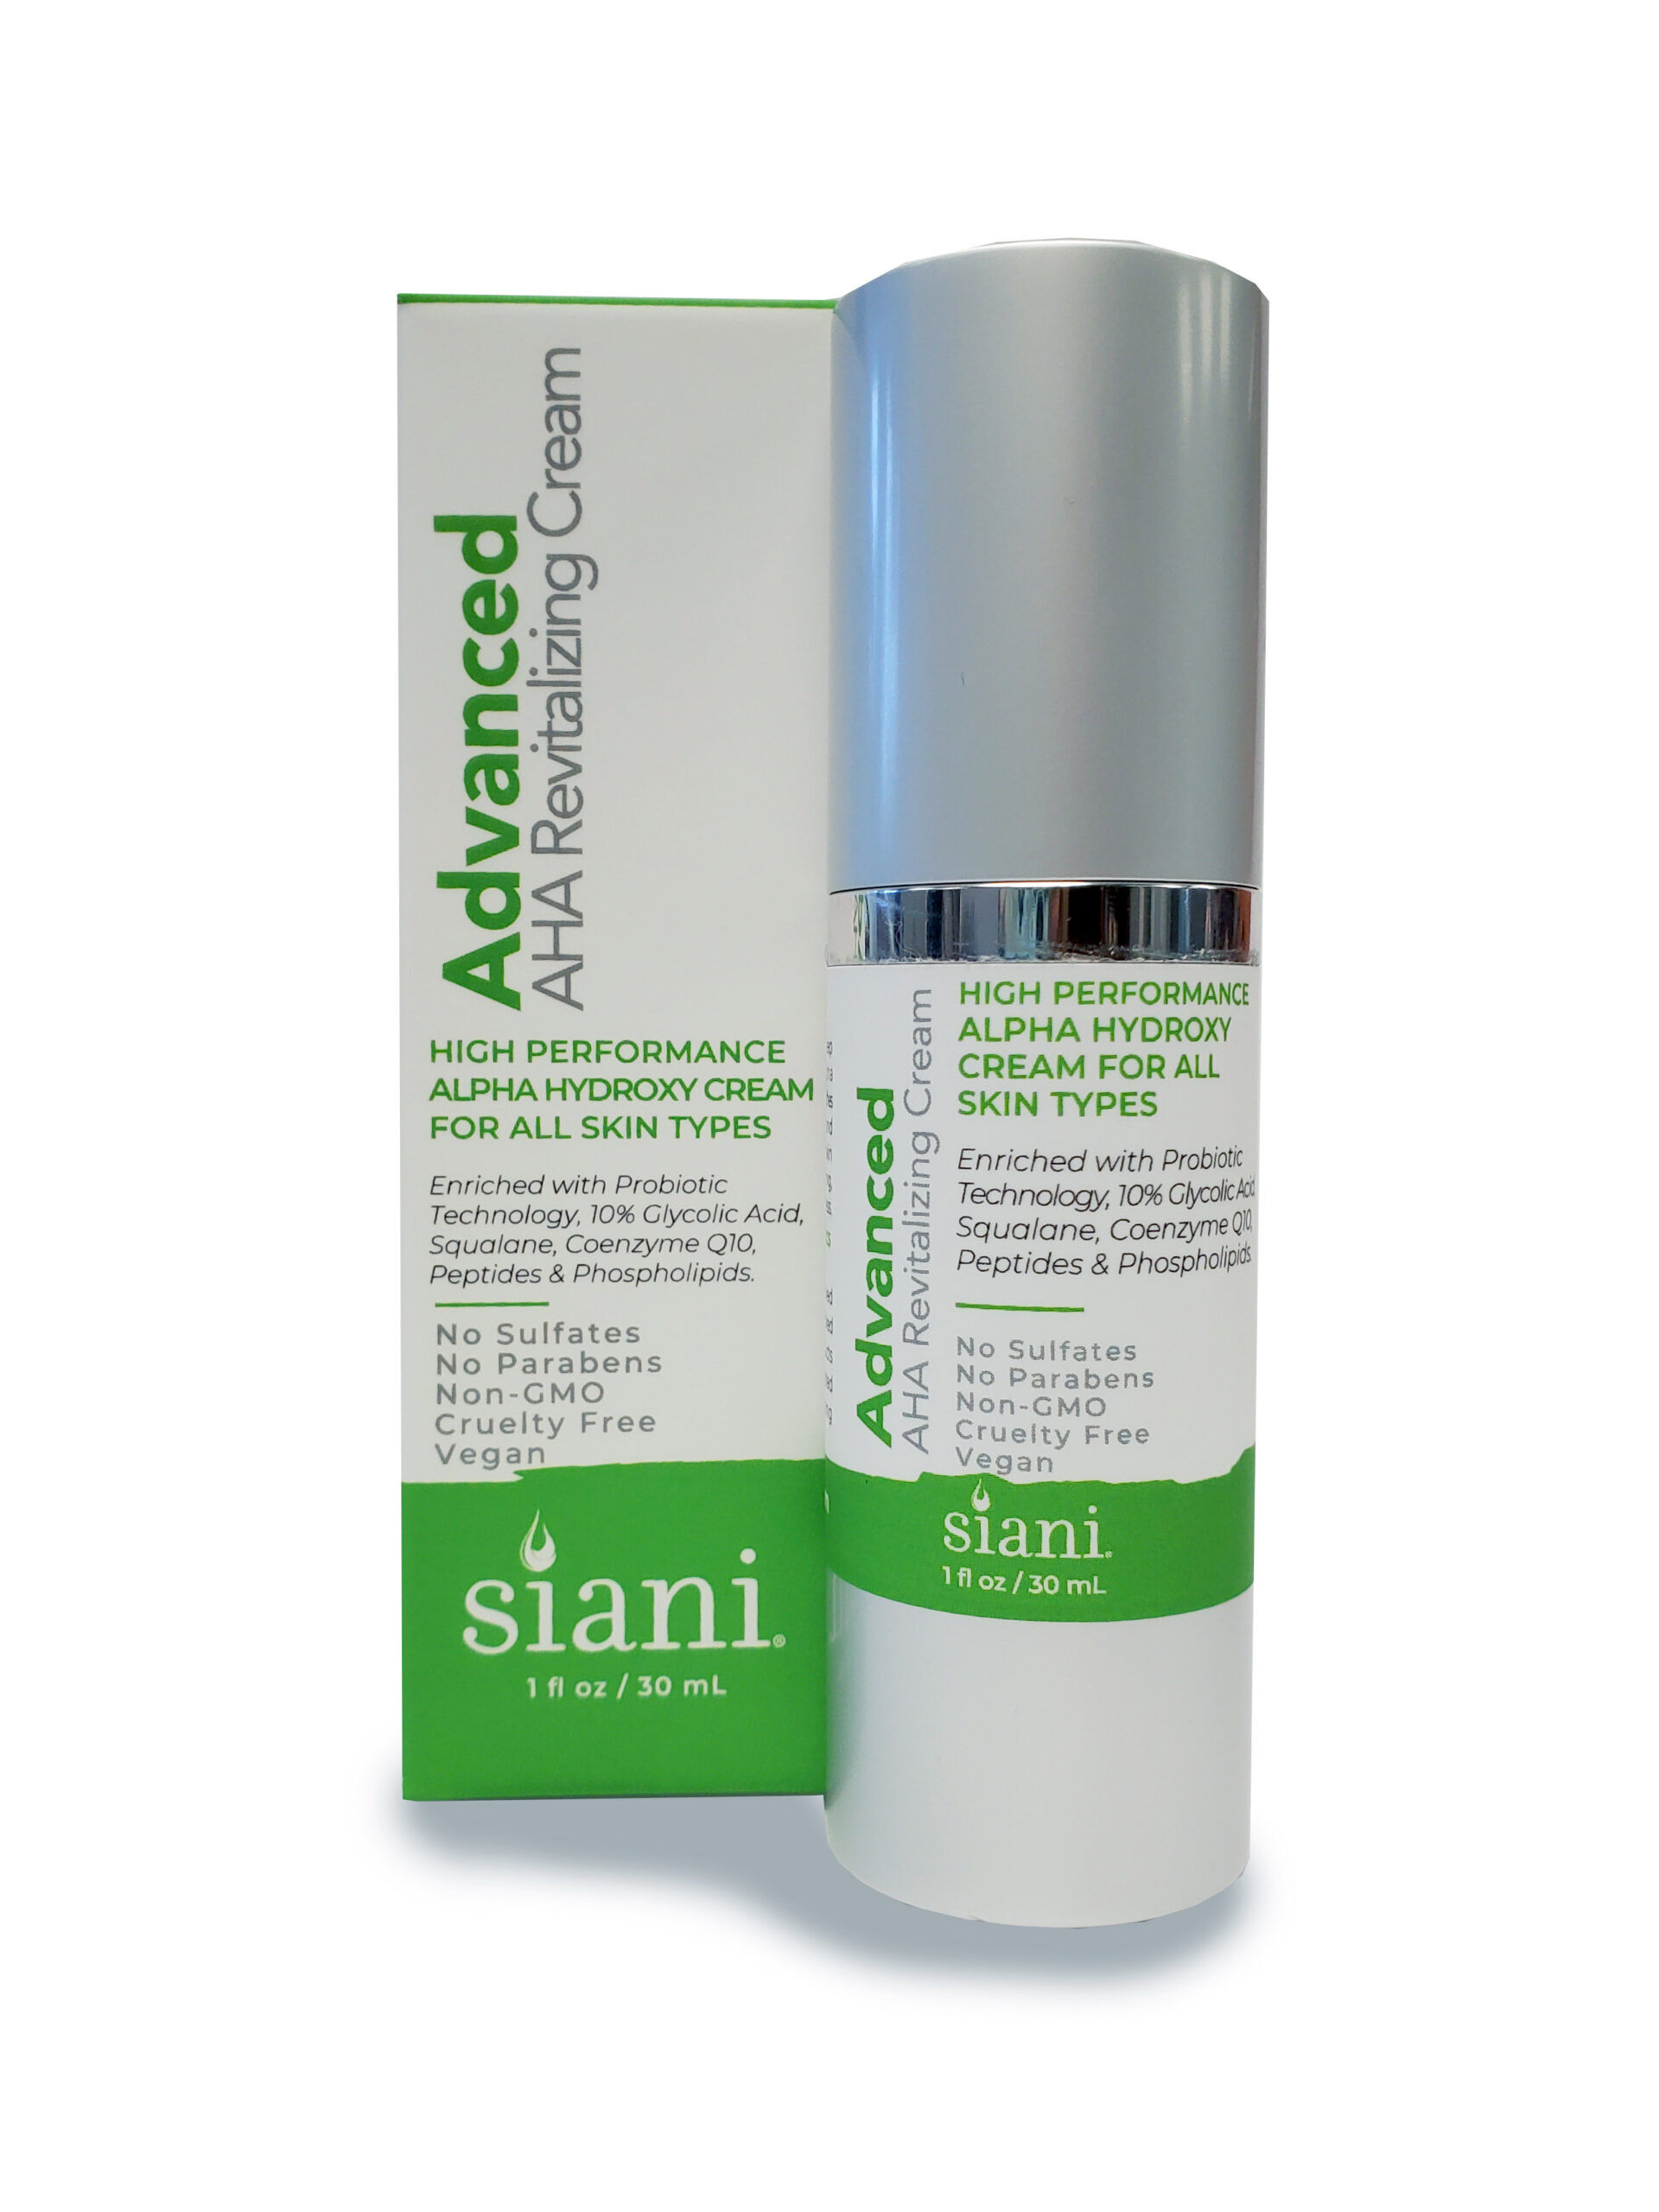 Siani Advanced AHA Revitalizing Cream Packaging